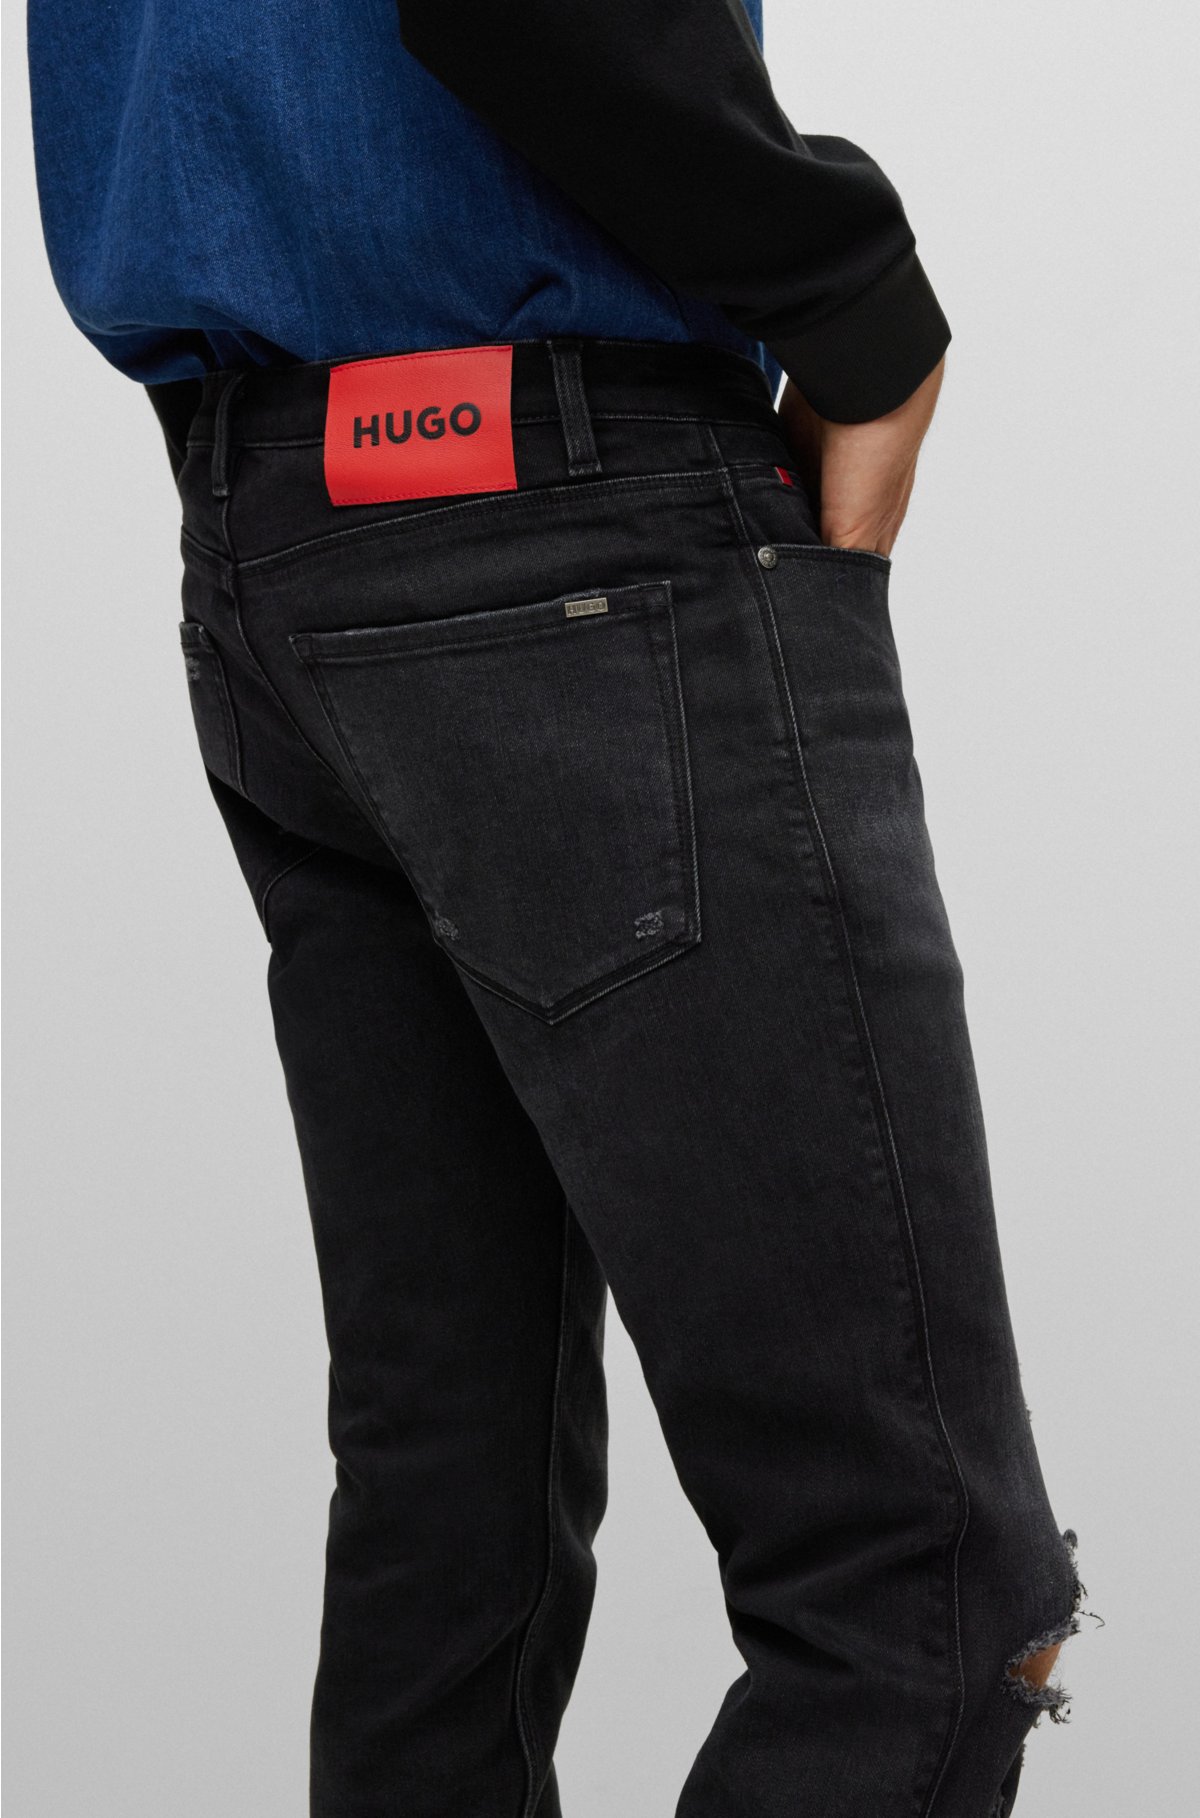 Licht landheer koffer HUGO - Slim-fit jeans in black comfort-stretch denim